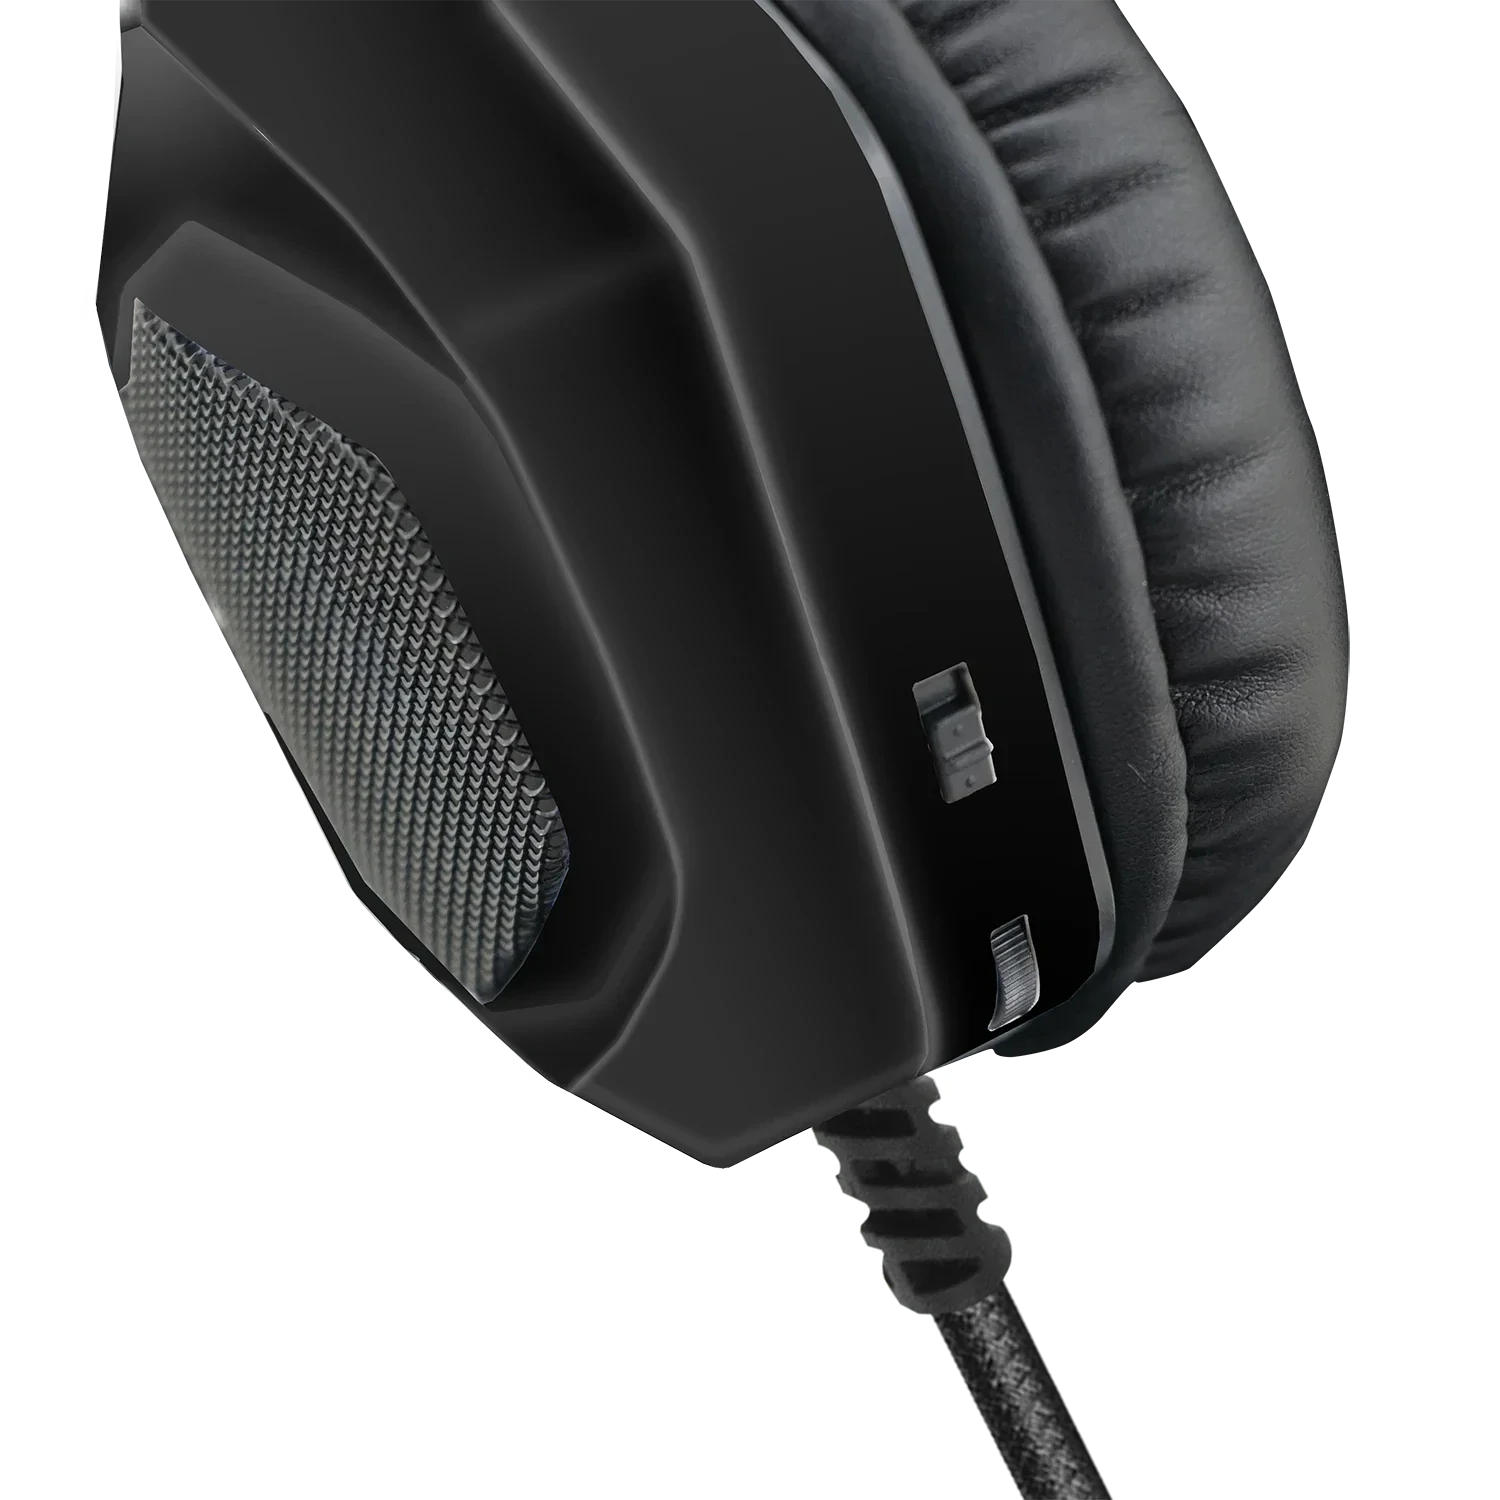 Casti Audio Gaming Spirit of Gamer Pro-H50 RGB pentru PS4/Xbox/Nintendo Microfon si Jack 3.5mm Negru